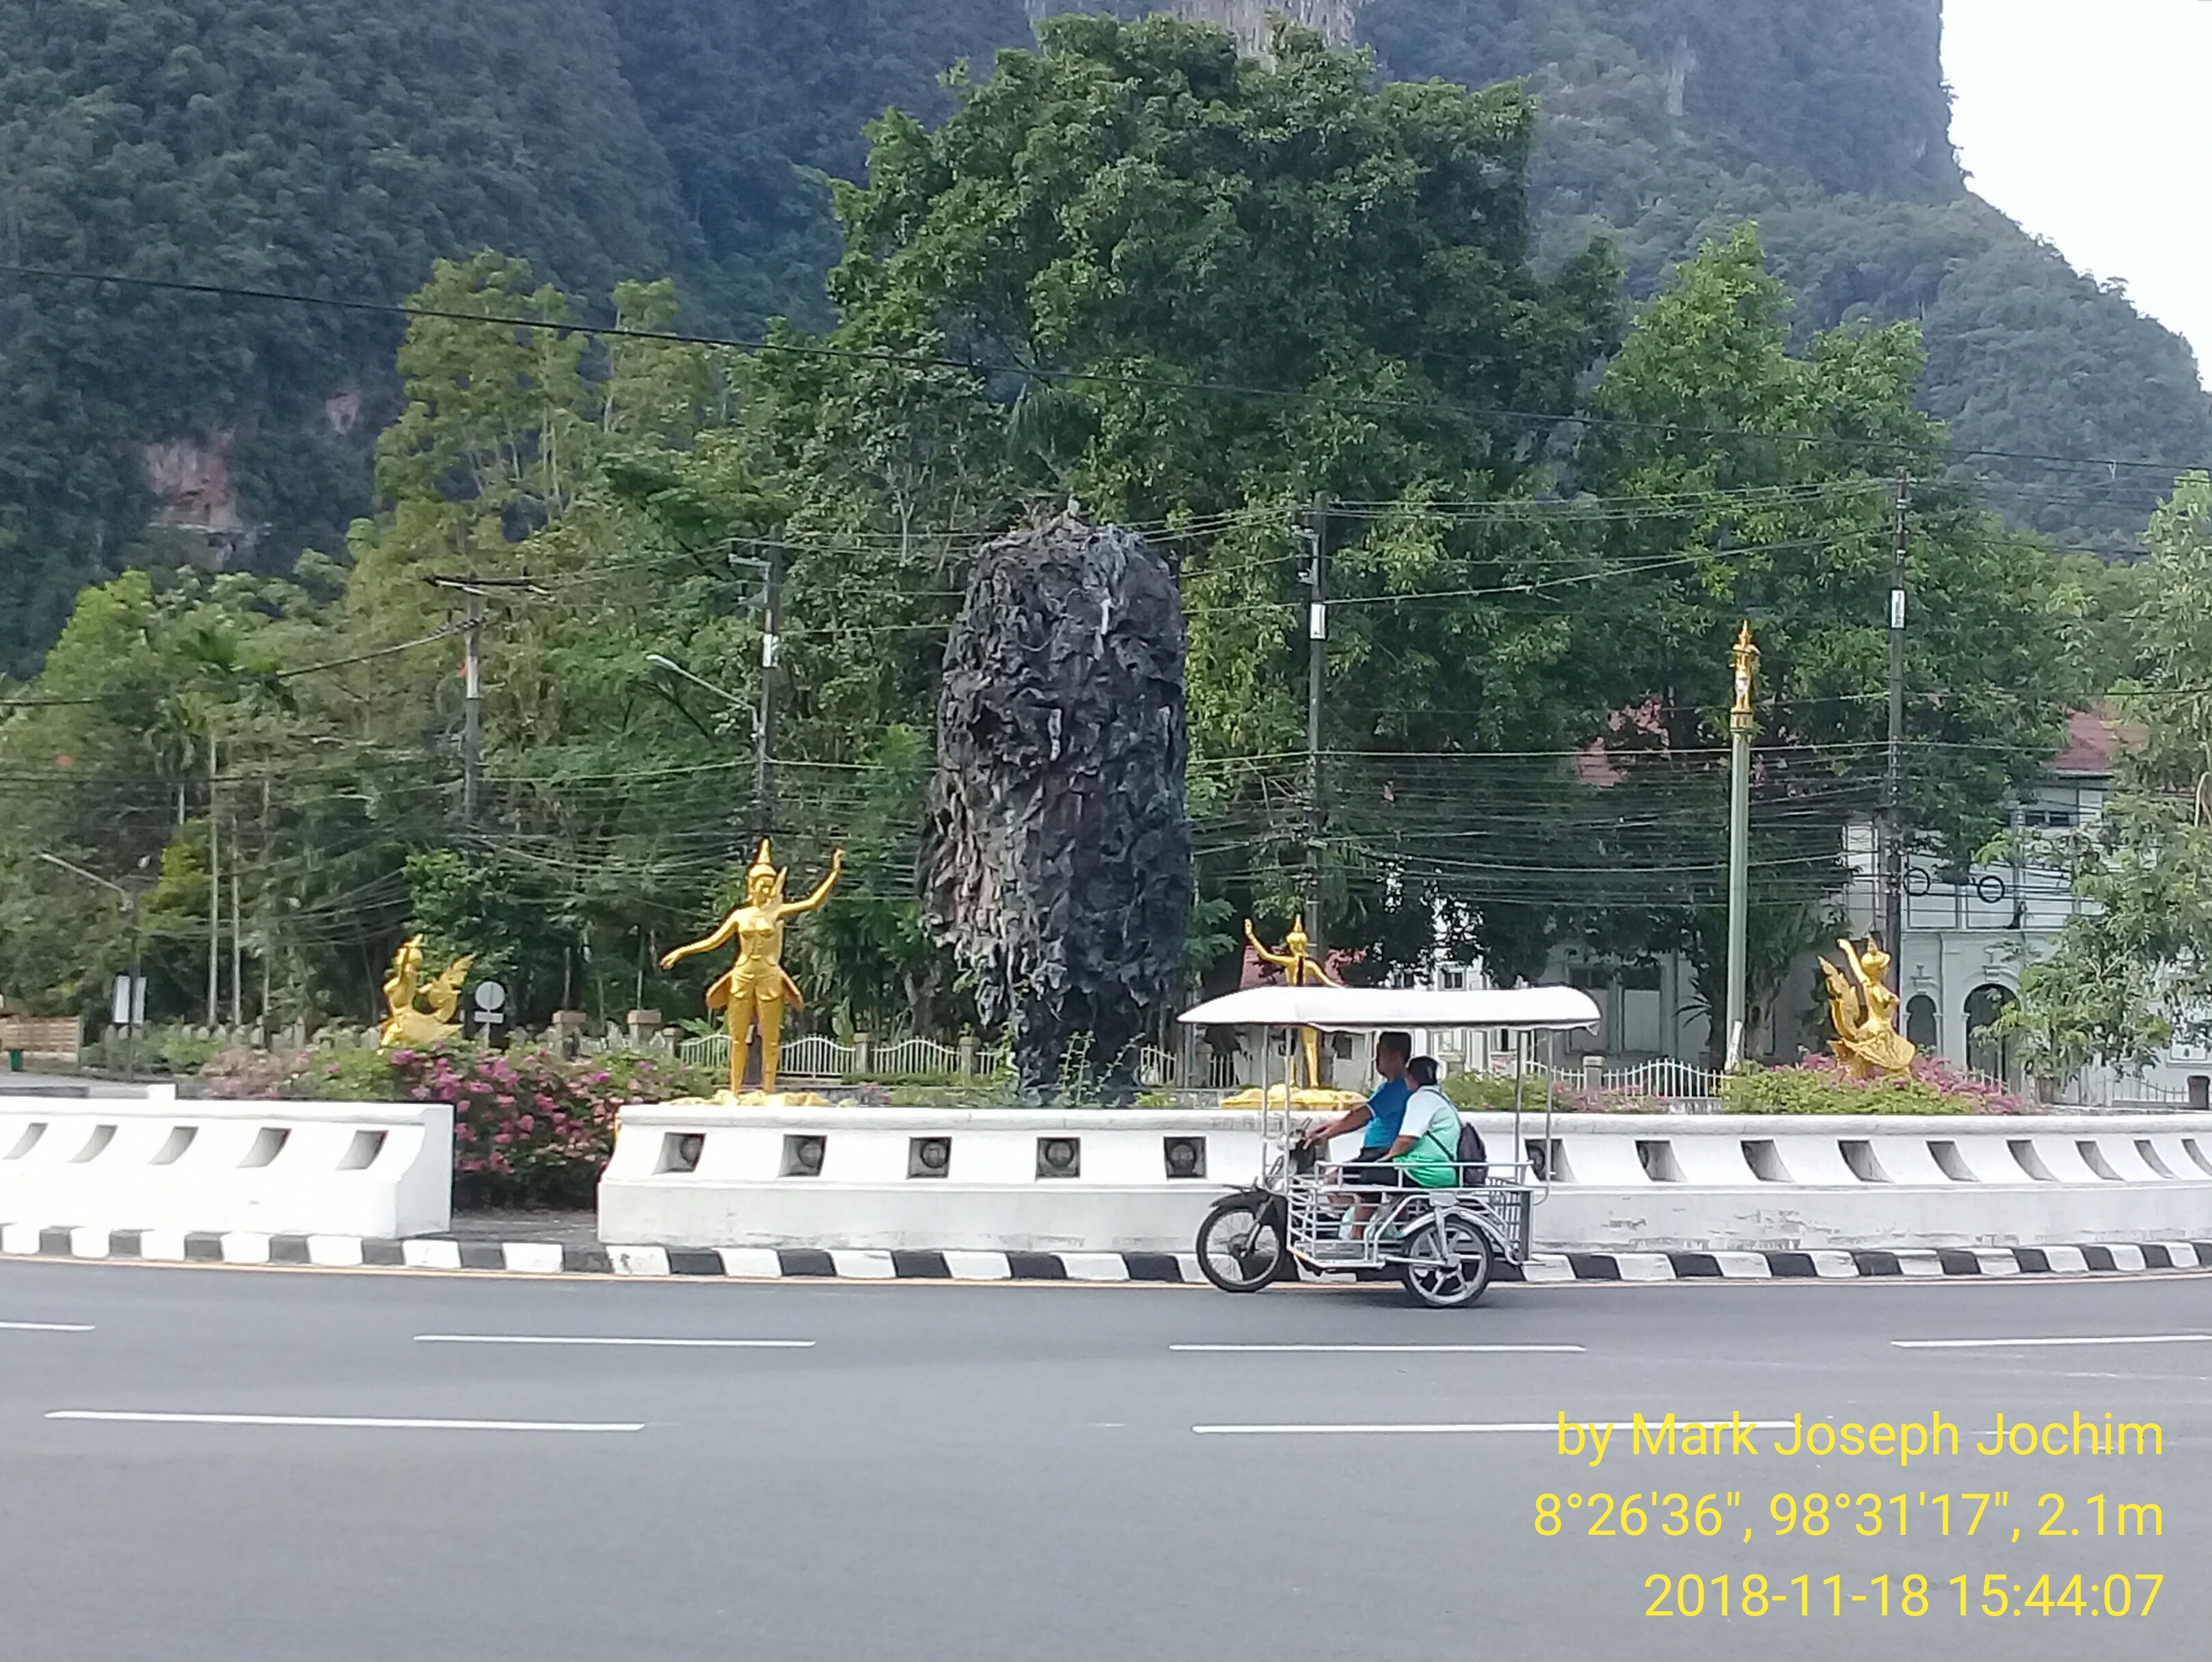 A replica of Ko Ta Pu (James Bond Island) sits in a traffic circle at the center of Phang Nga Town, Thailand. Photo taken by Mark Joseph Jochim on November 18, 2018.